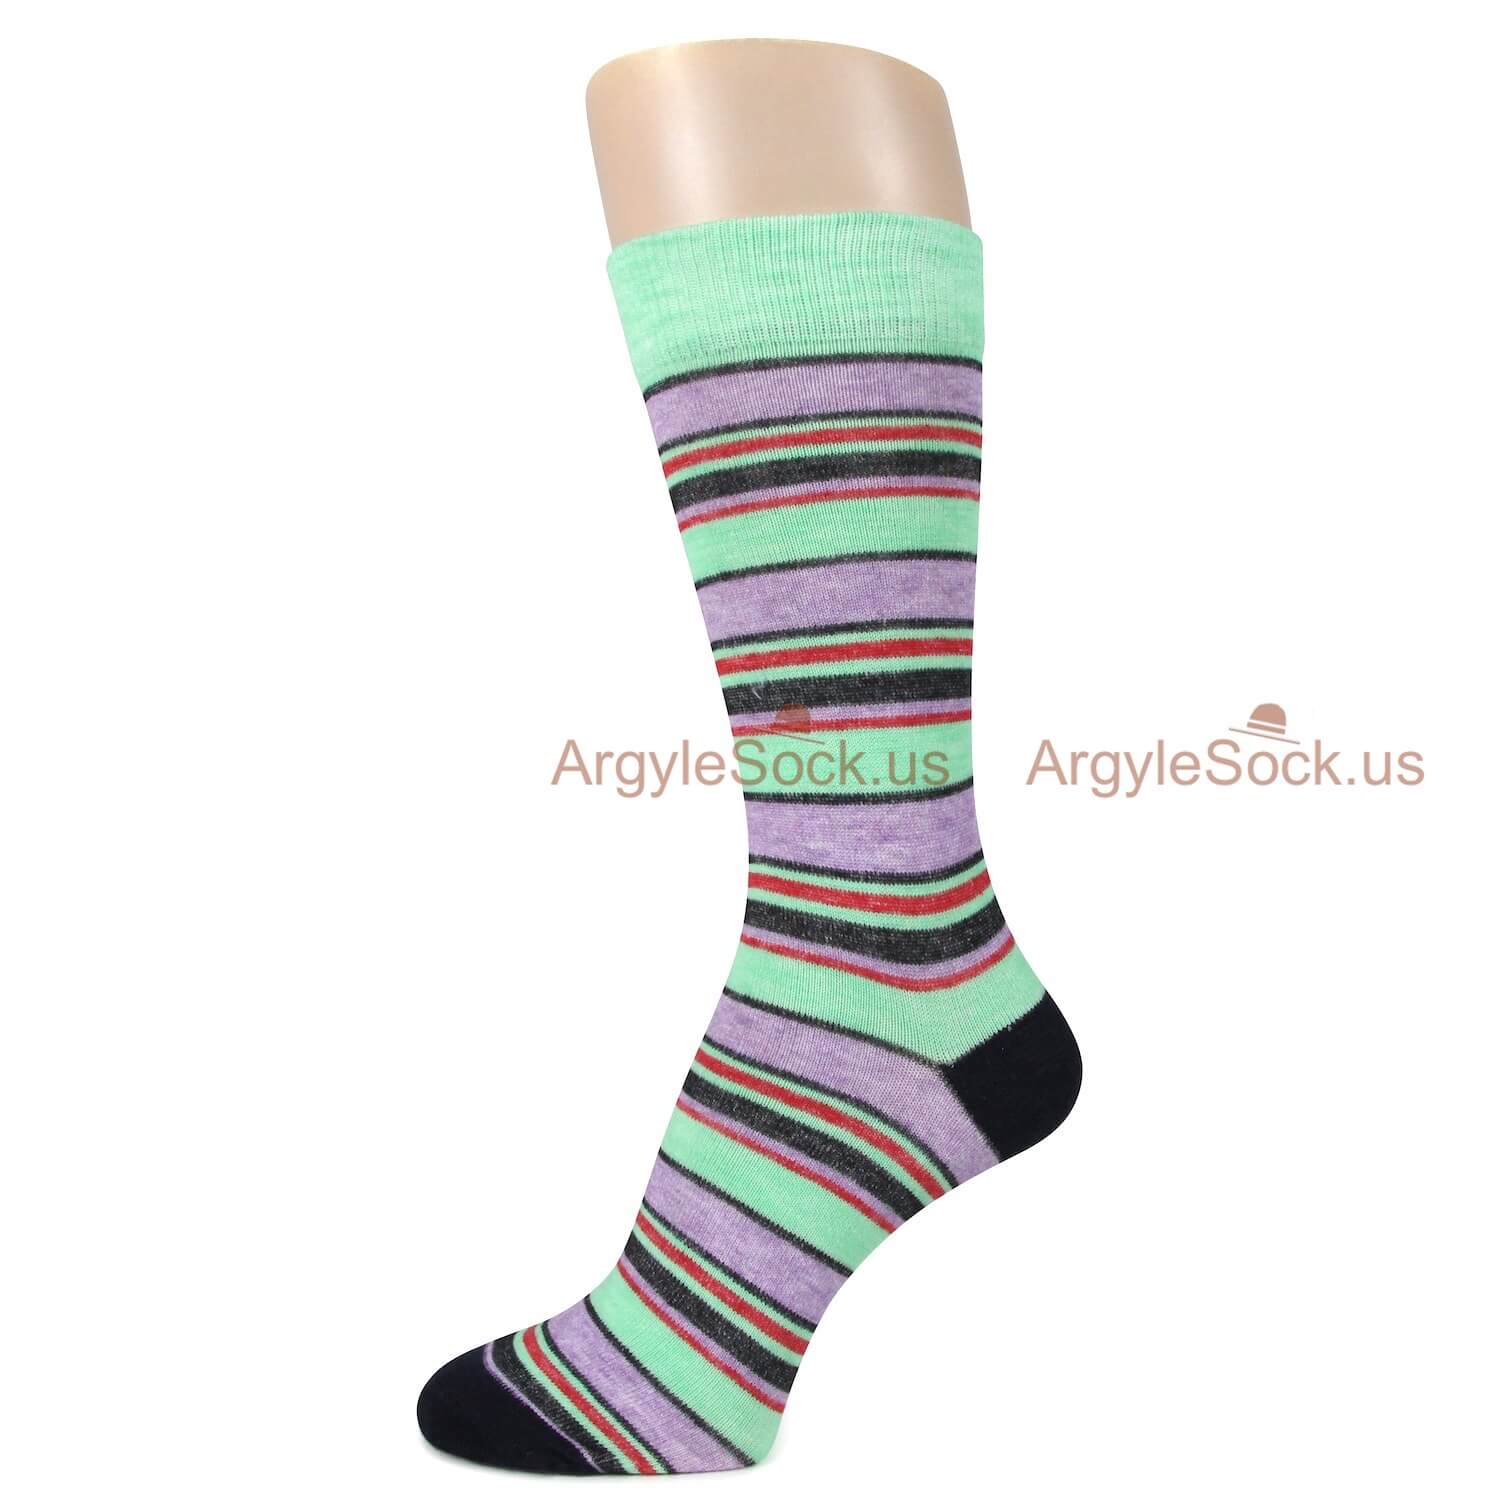 Aqua with Vibrant Color Stripes Socks For Men